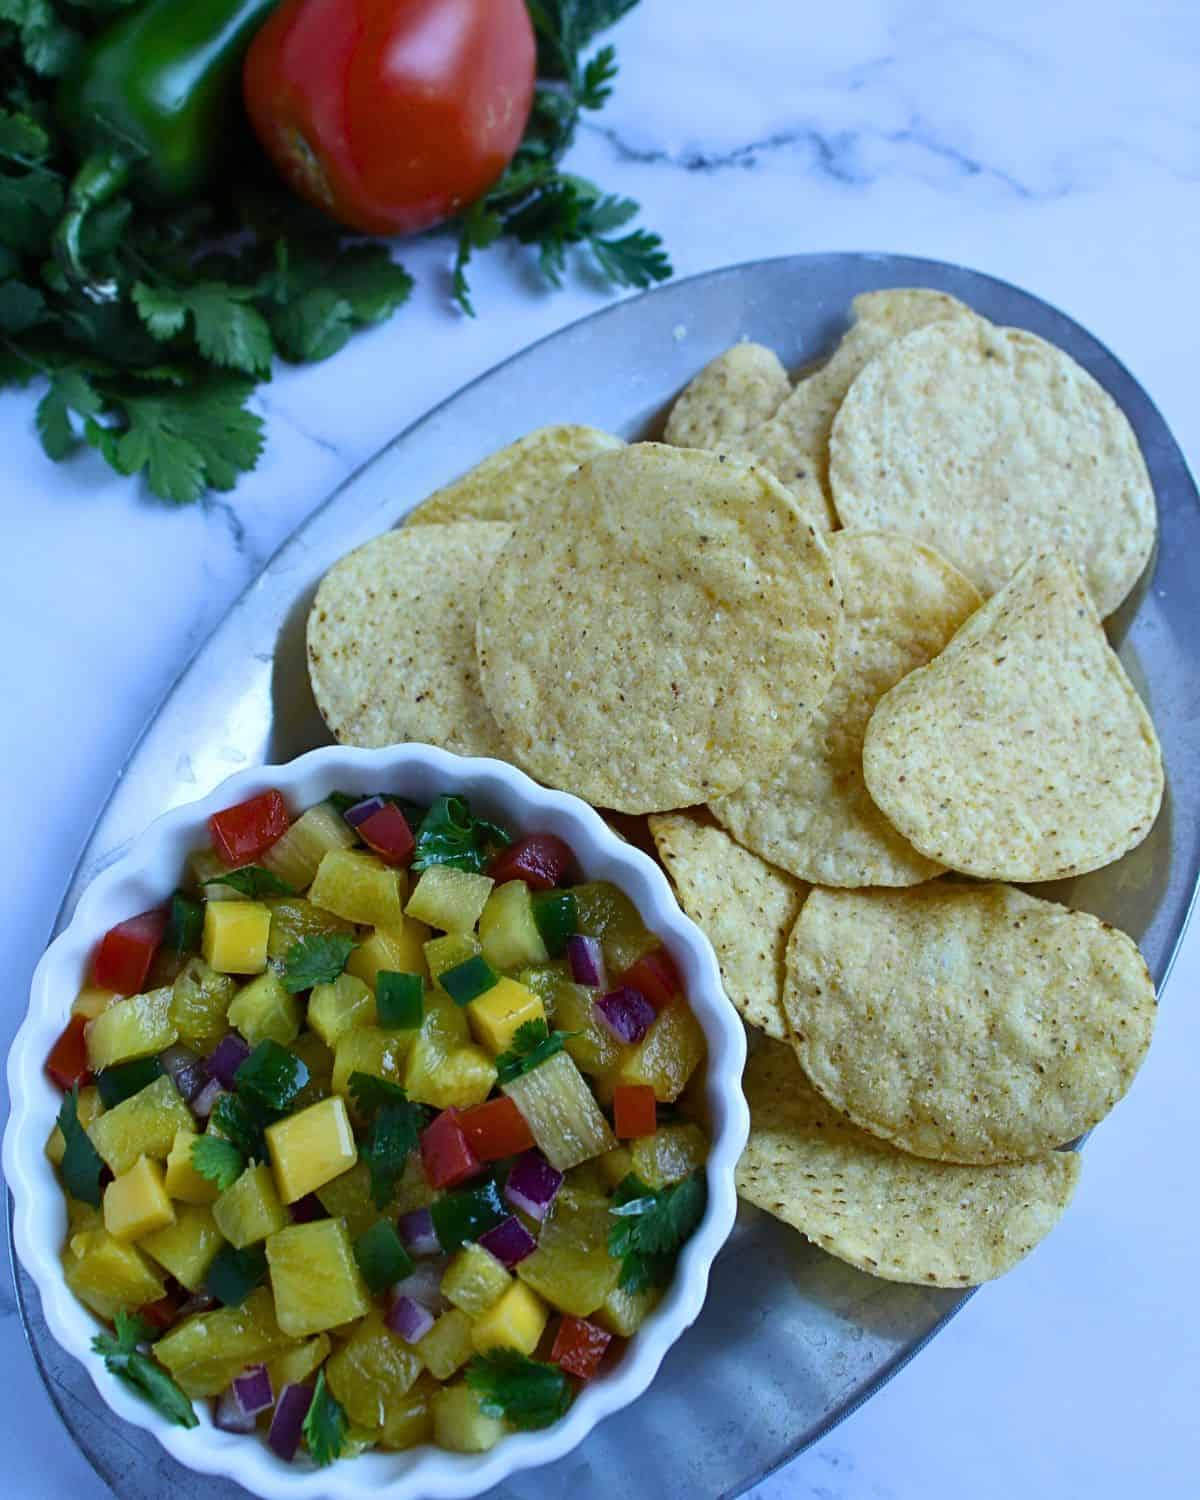 Mango pineapple pico de gallo salsa in a bowl with tortilla chips.